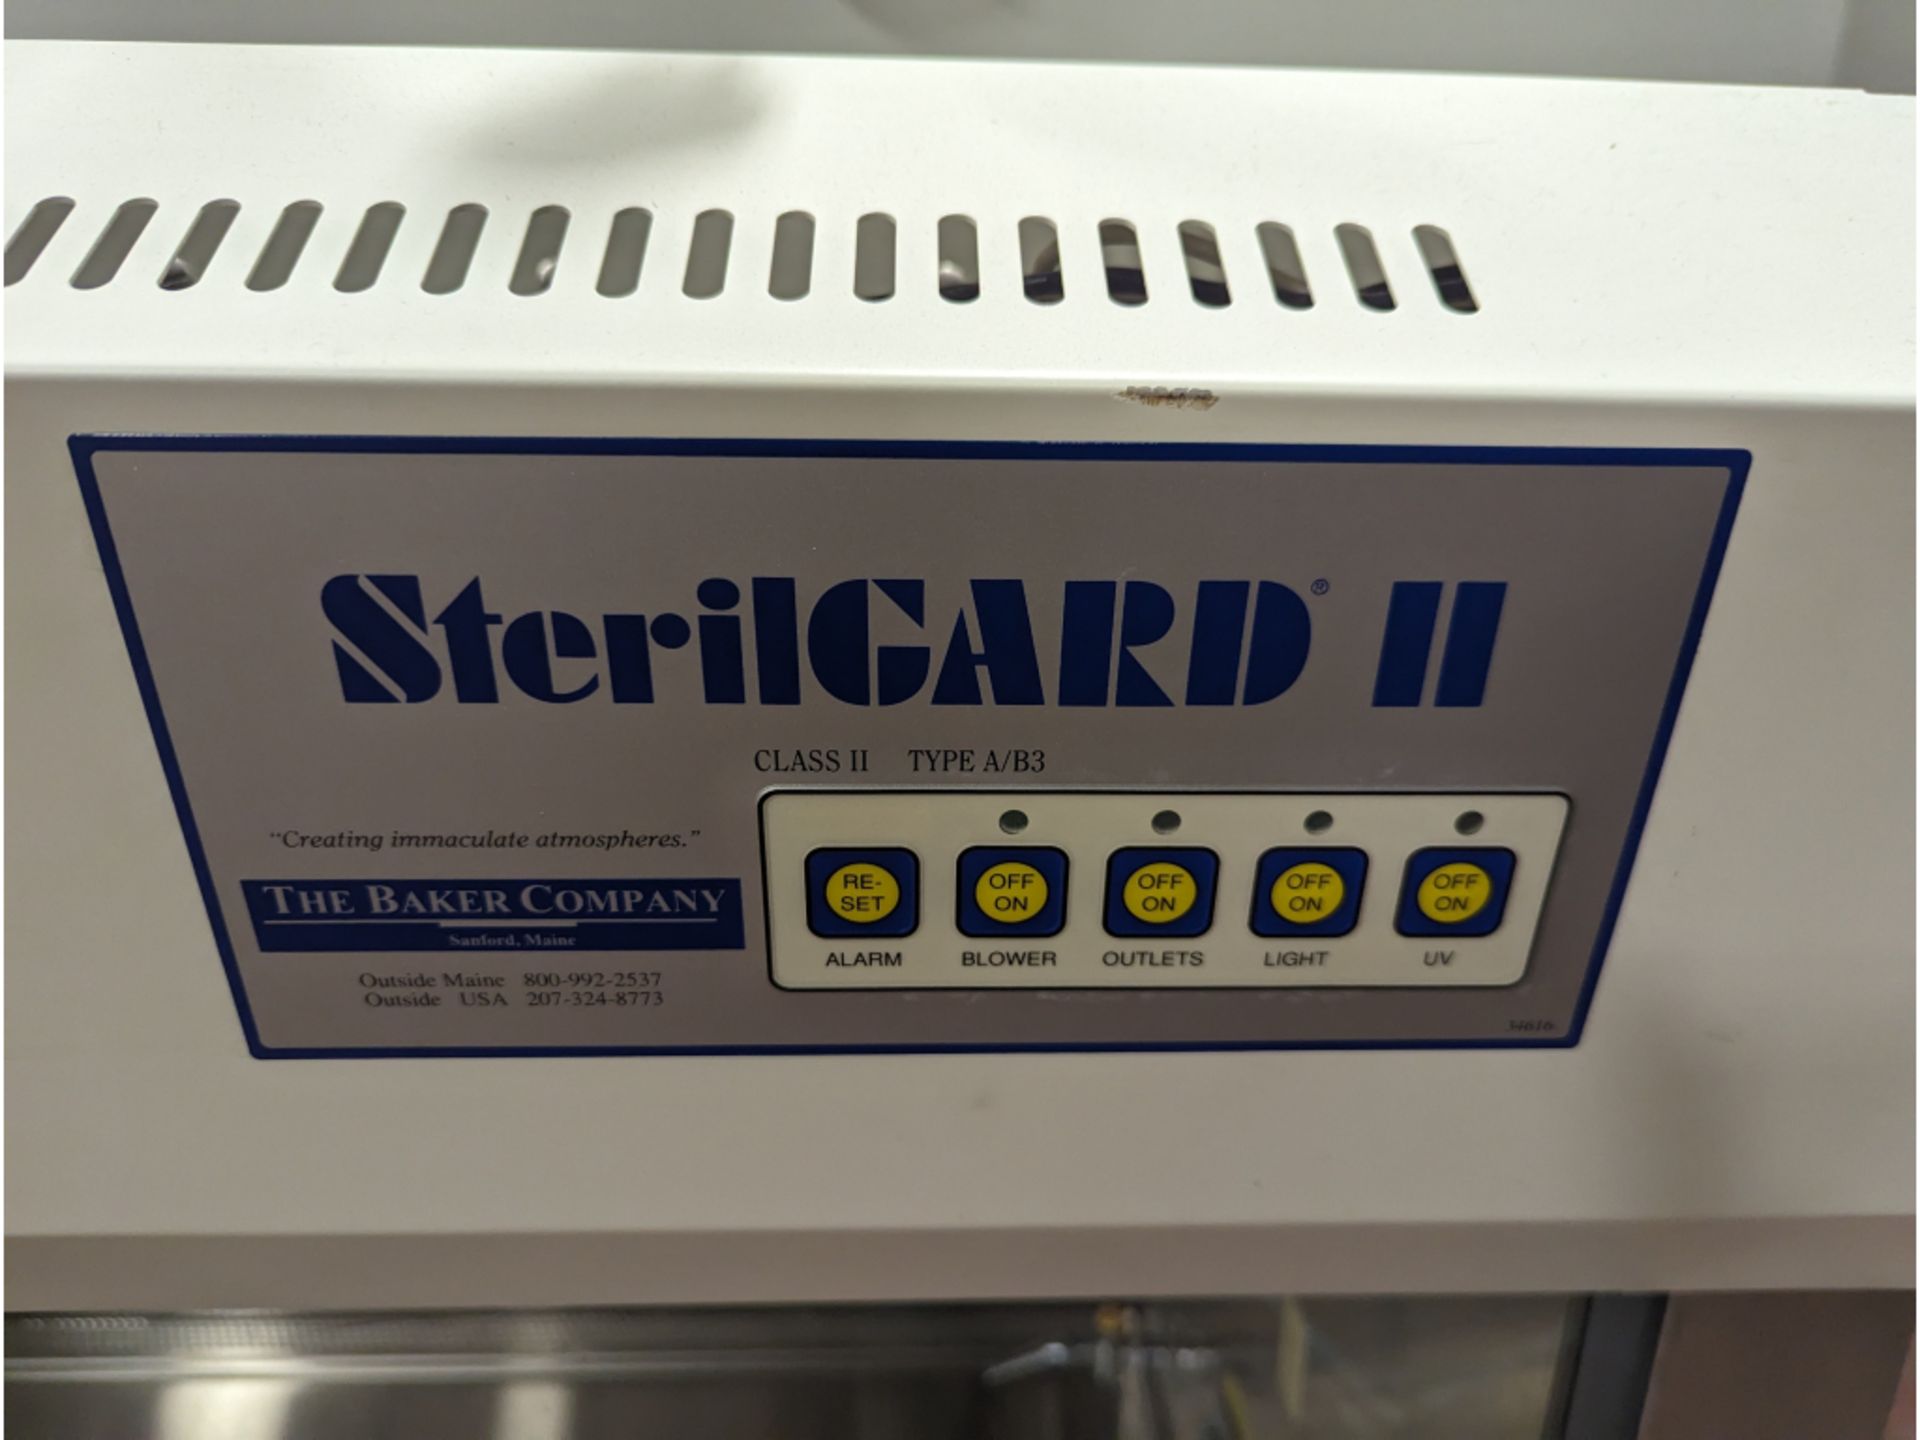 Baker Company Sg-400 SterilGard Biological Safety Cabinet - Image 4 of 6